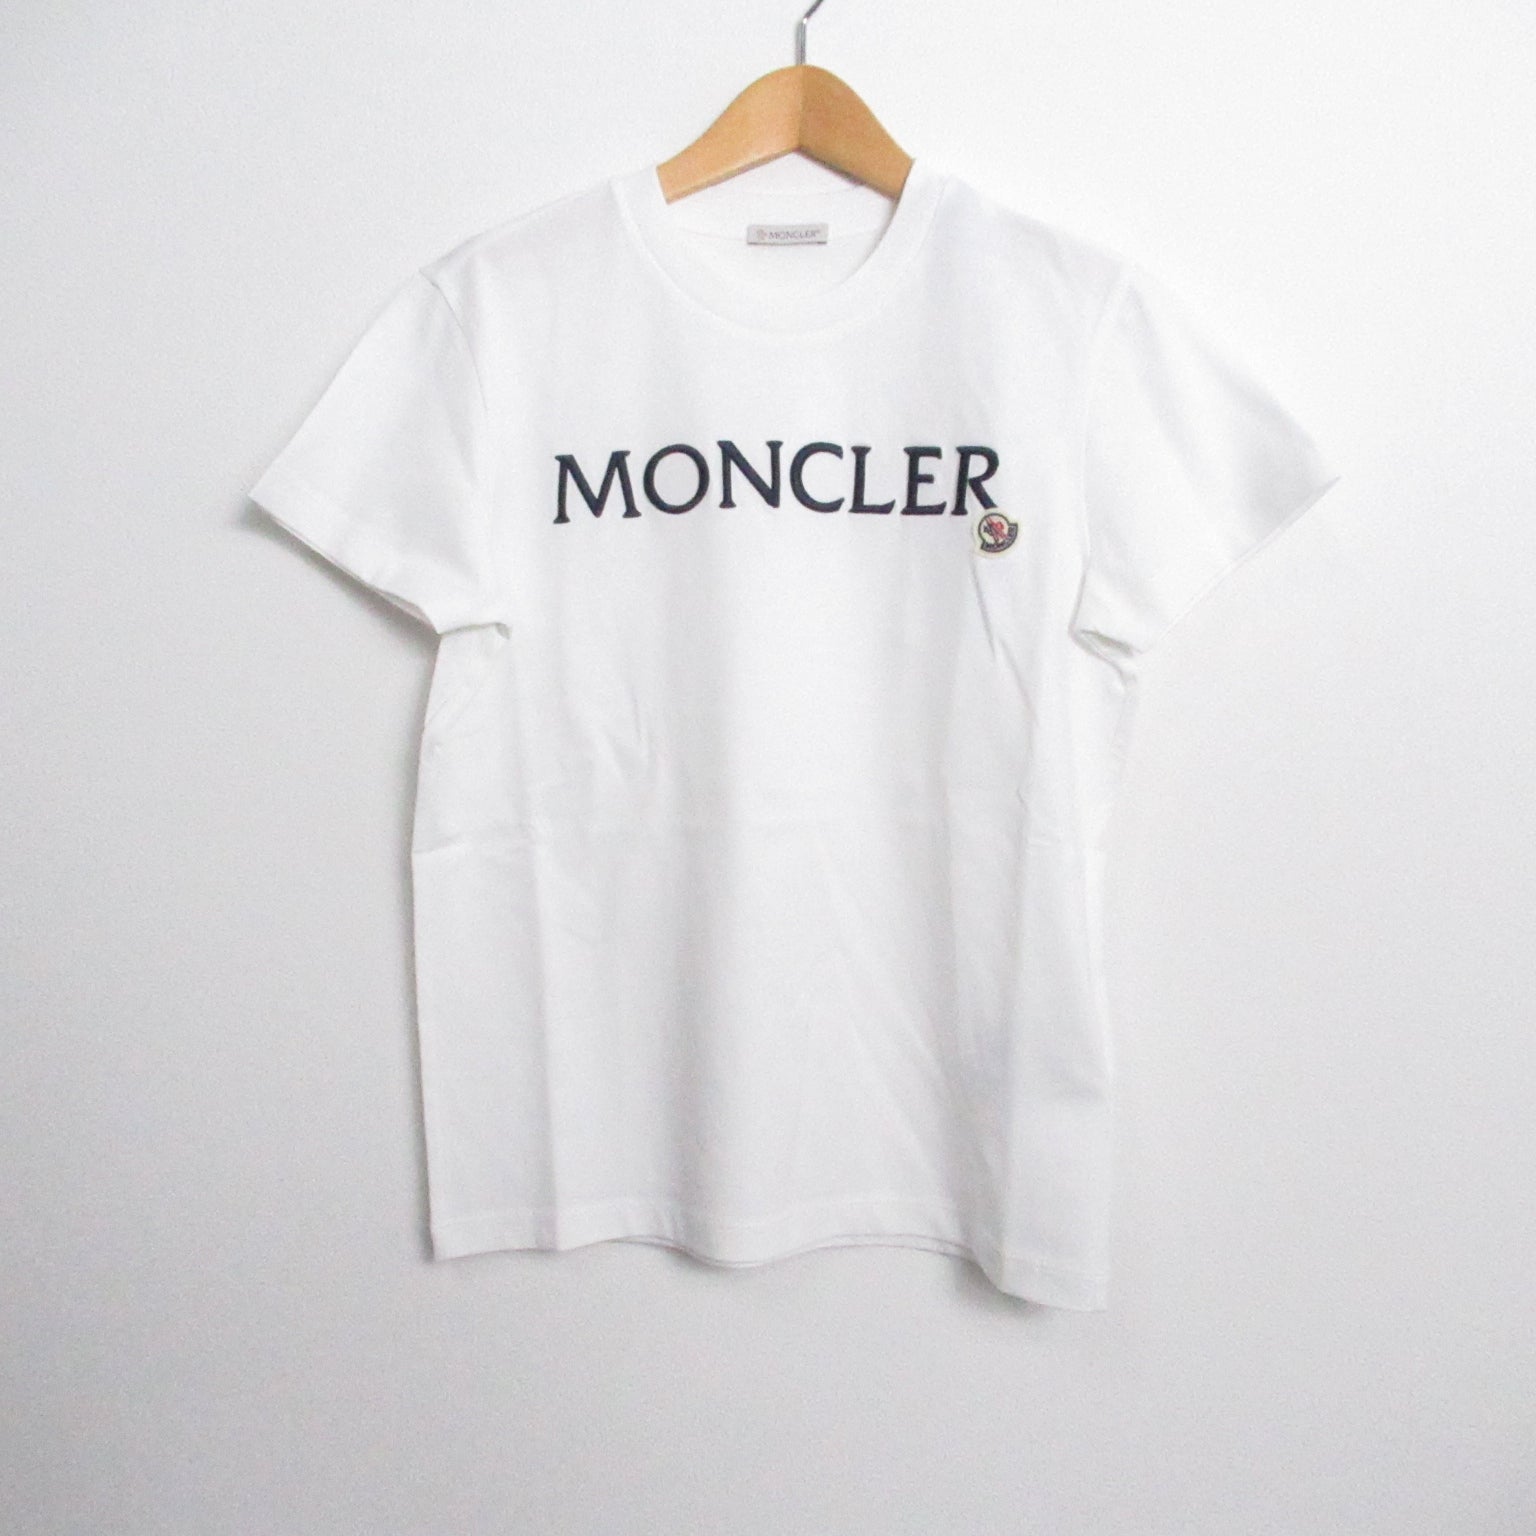 Moncler MONCLER  Half-Hand   Tops Cotton  White 8C00006829HP037XS